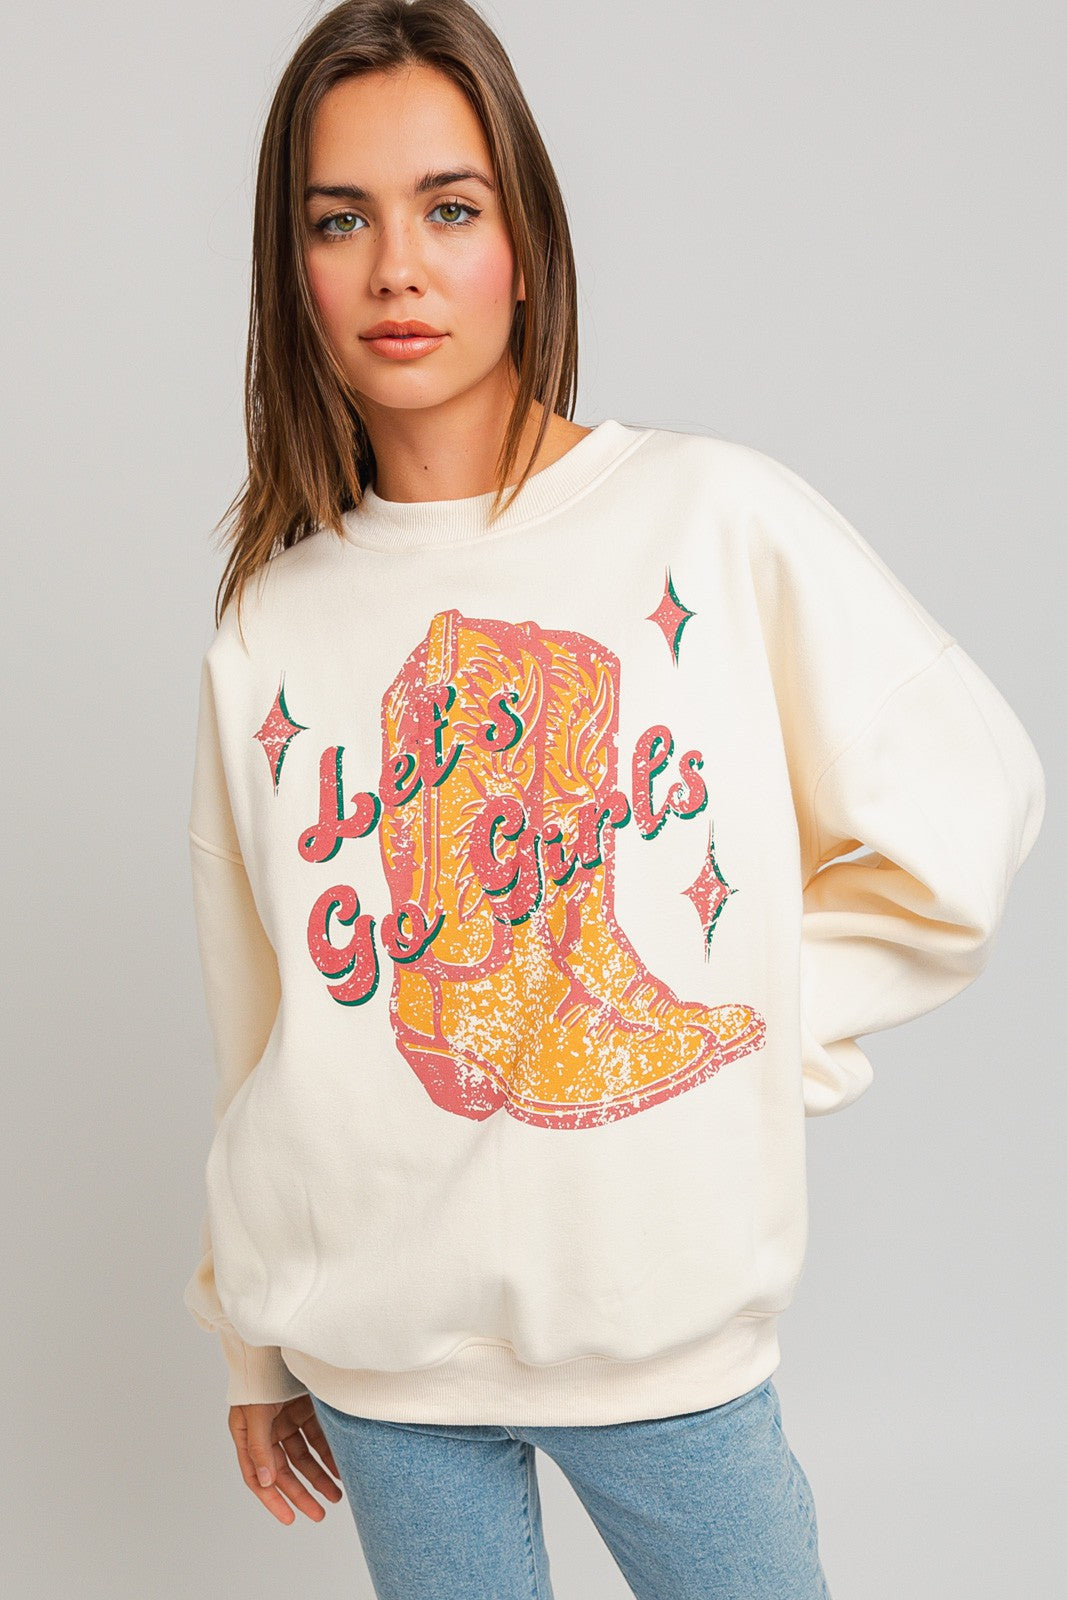 zSALE Let's Go Girls Boot Graphic Crewneck Pullover - Cream Multi